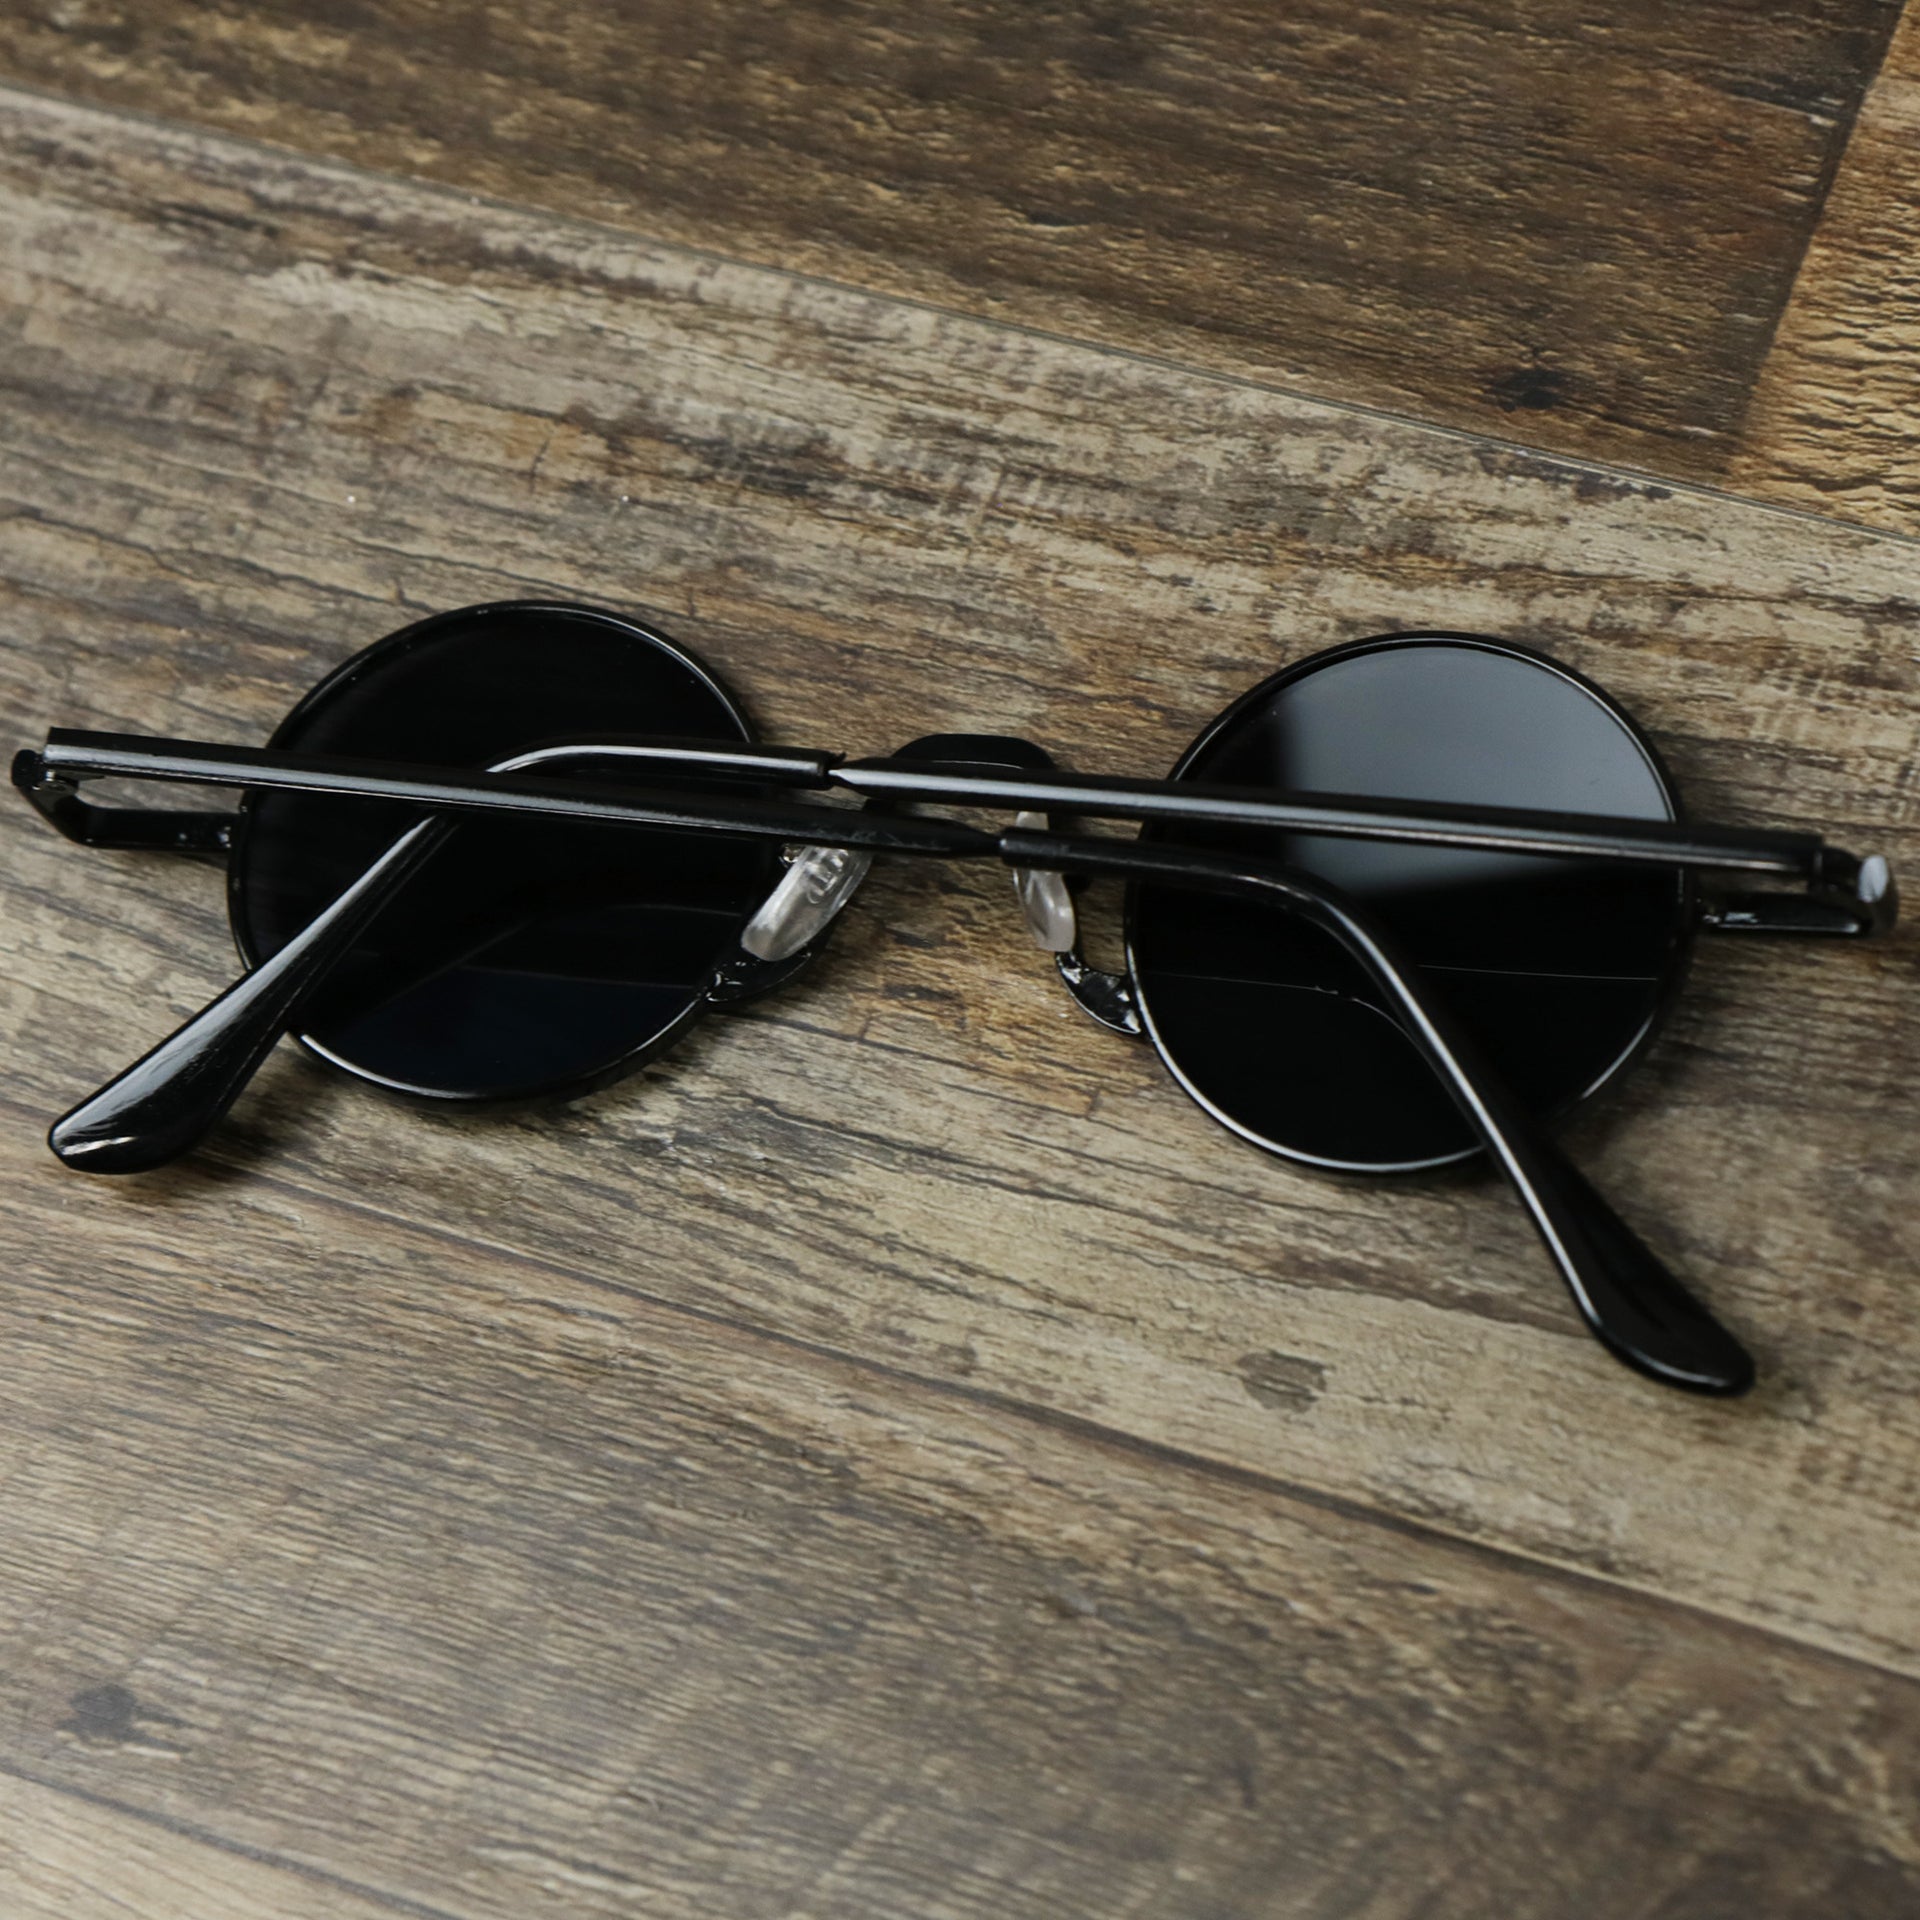 The Round Frames Black Lens Sunglasses with Black Frame folded up